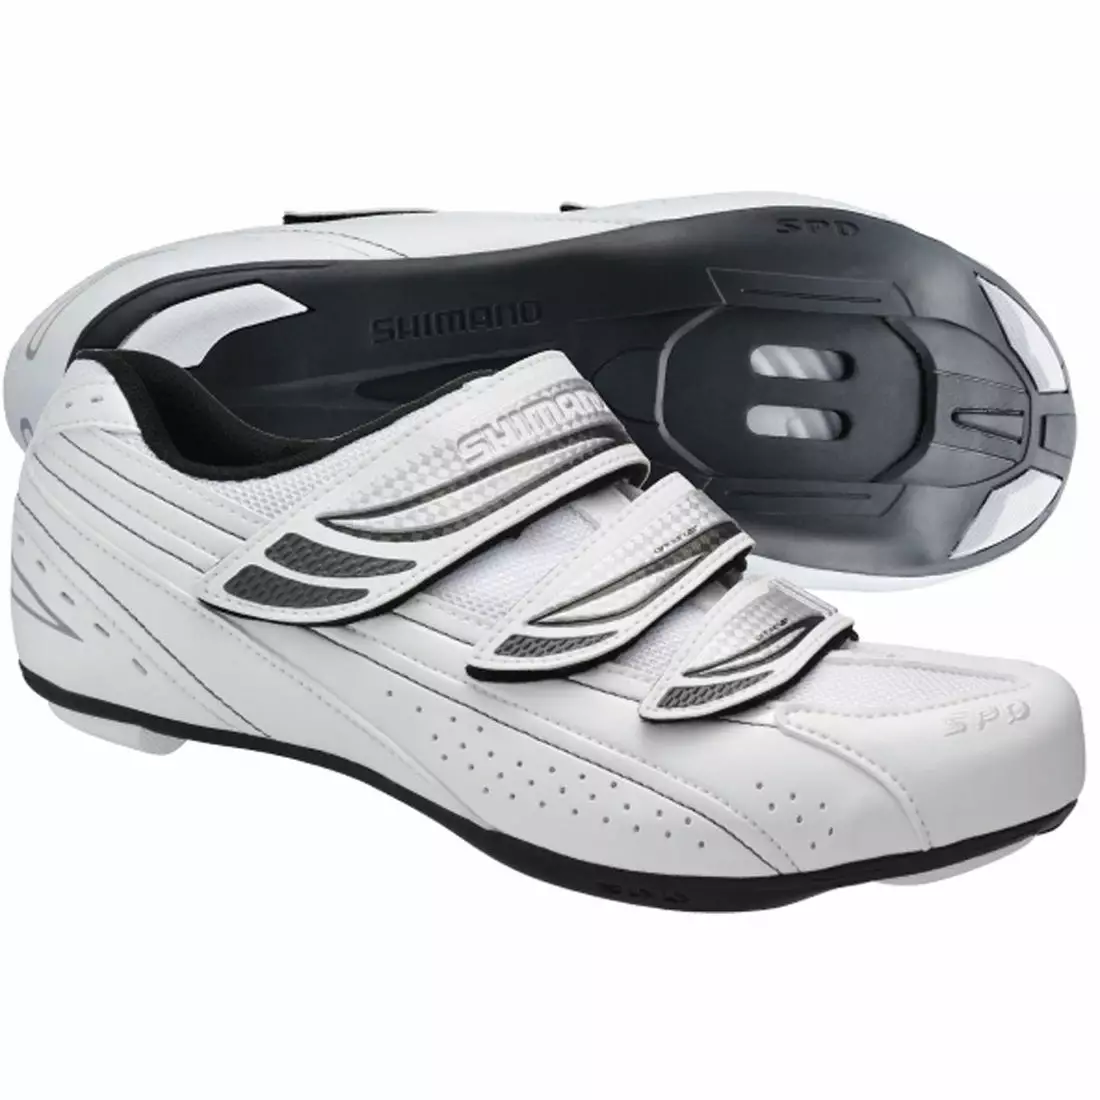 SHIMANO SH-WR35 - women's road shoes, color: white